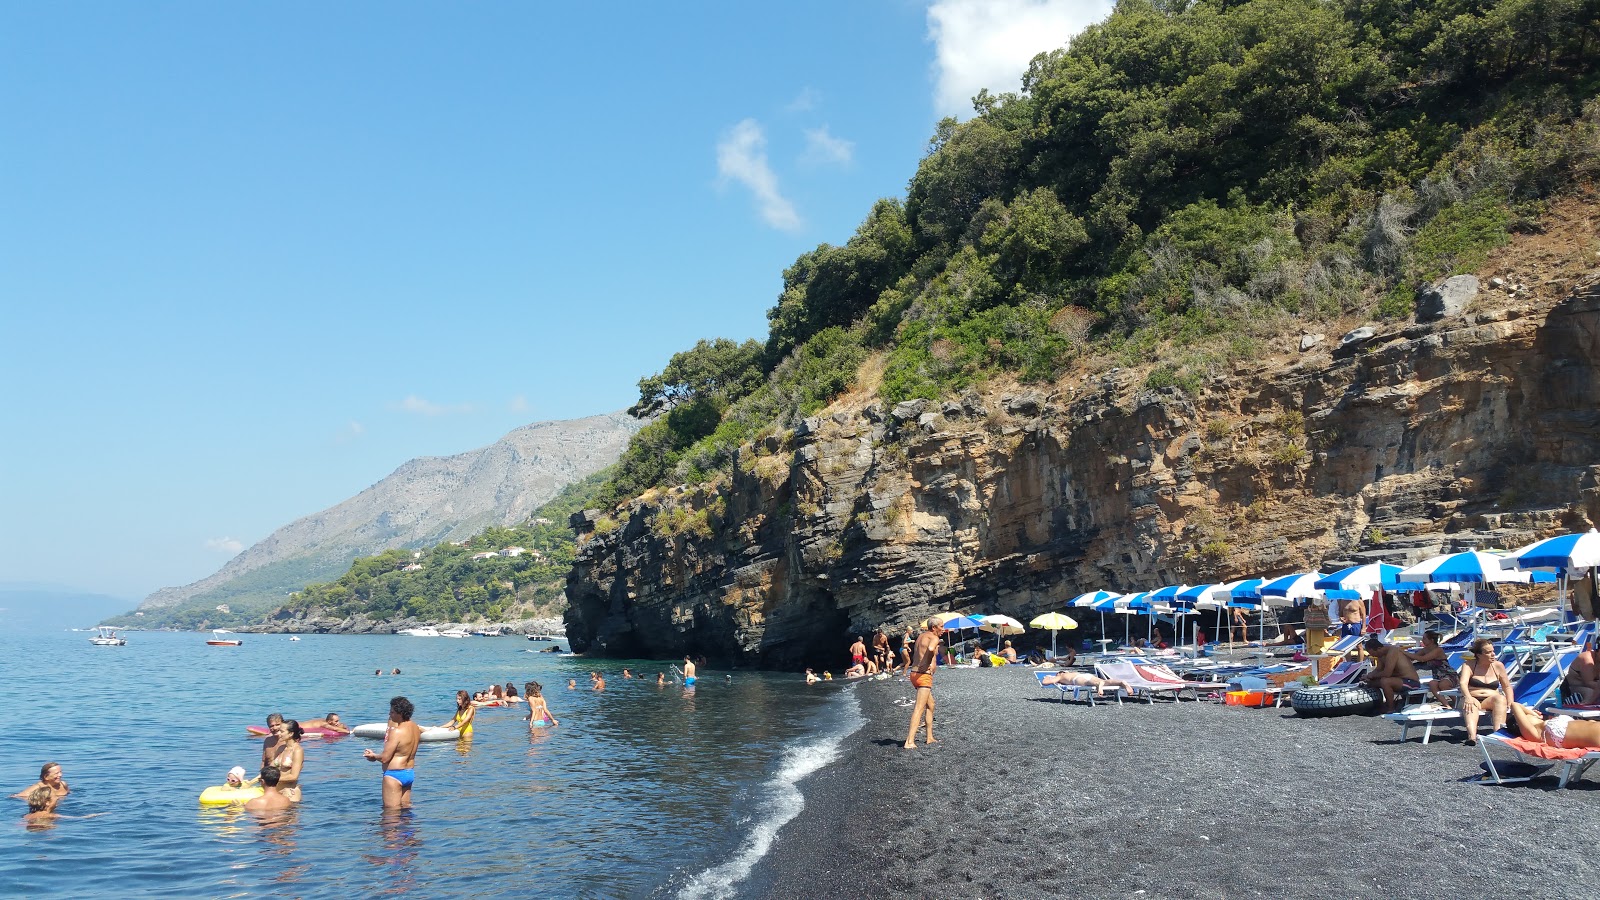 Photo of Spiaggia Nera and its beautiful scenery